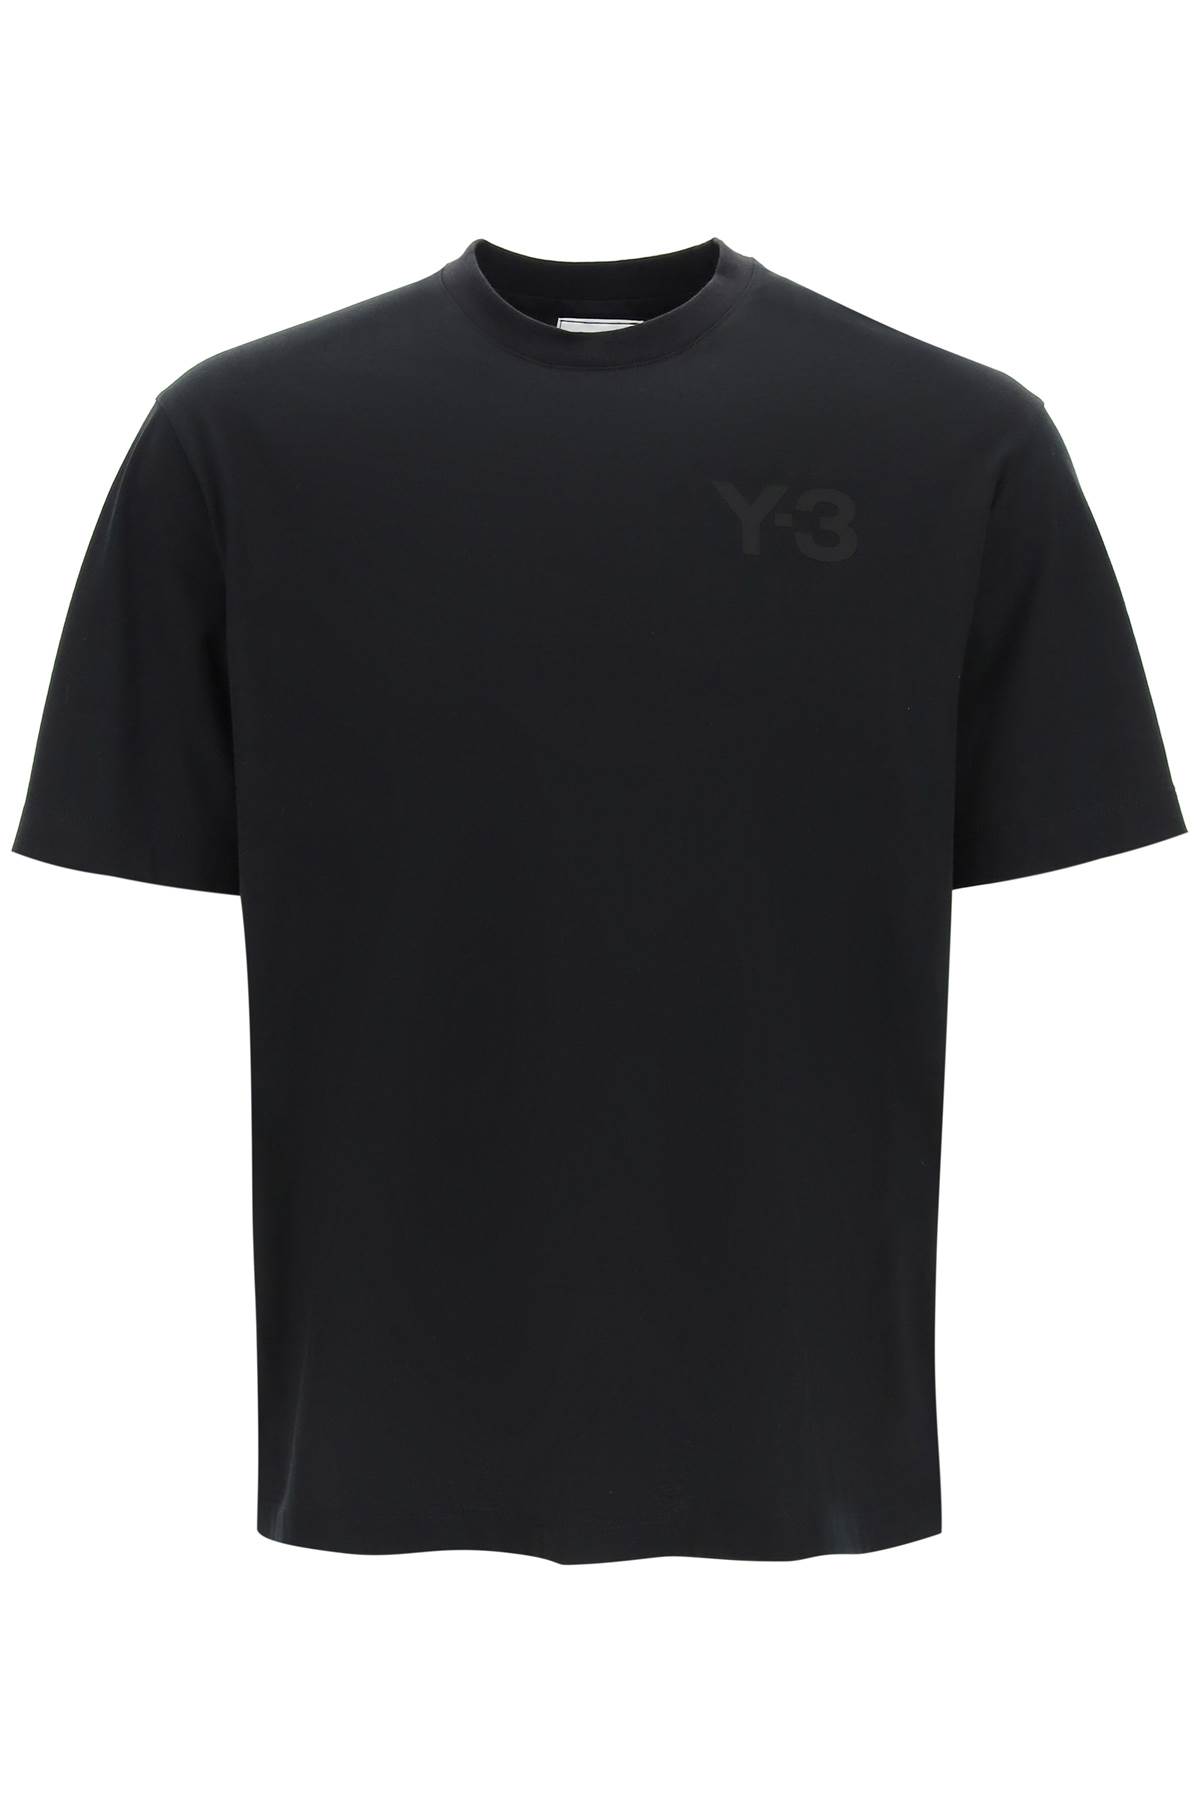 Y-3 Logo Cotton Short-sleeved T-shirt